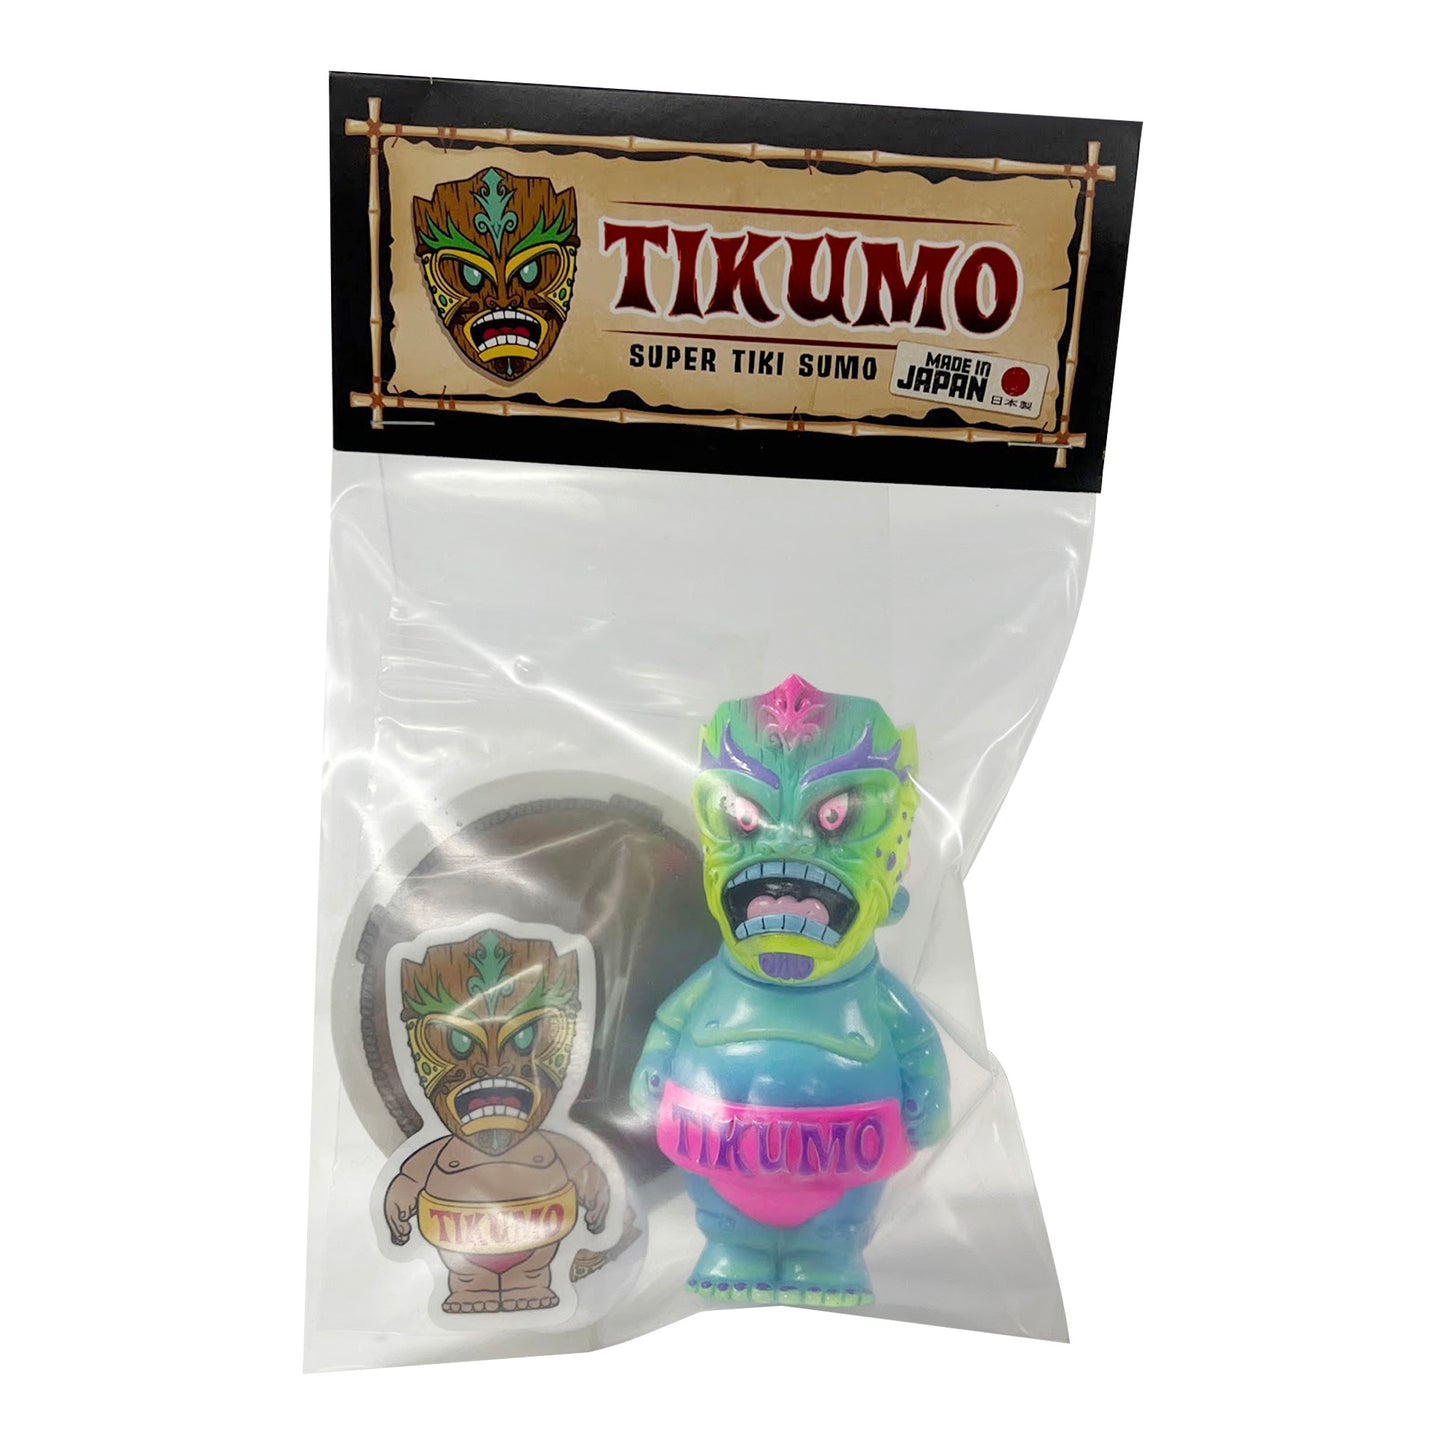 TIKUMO - Super Tiki Sumo Spring Ver. Sofubi Figure Made in Japan